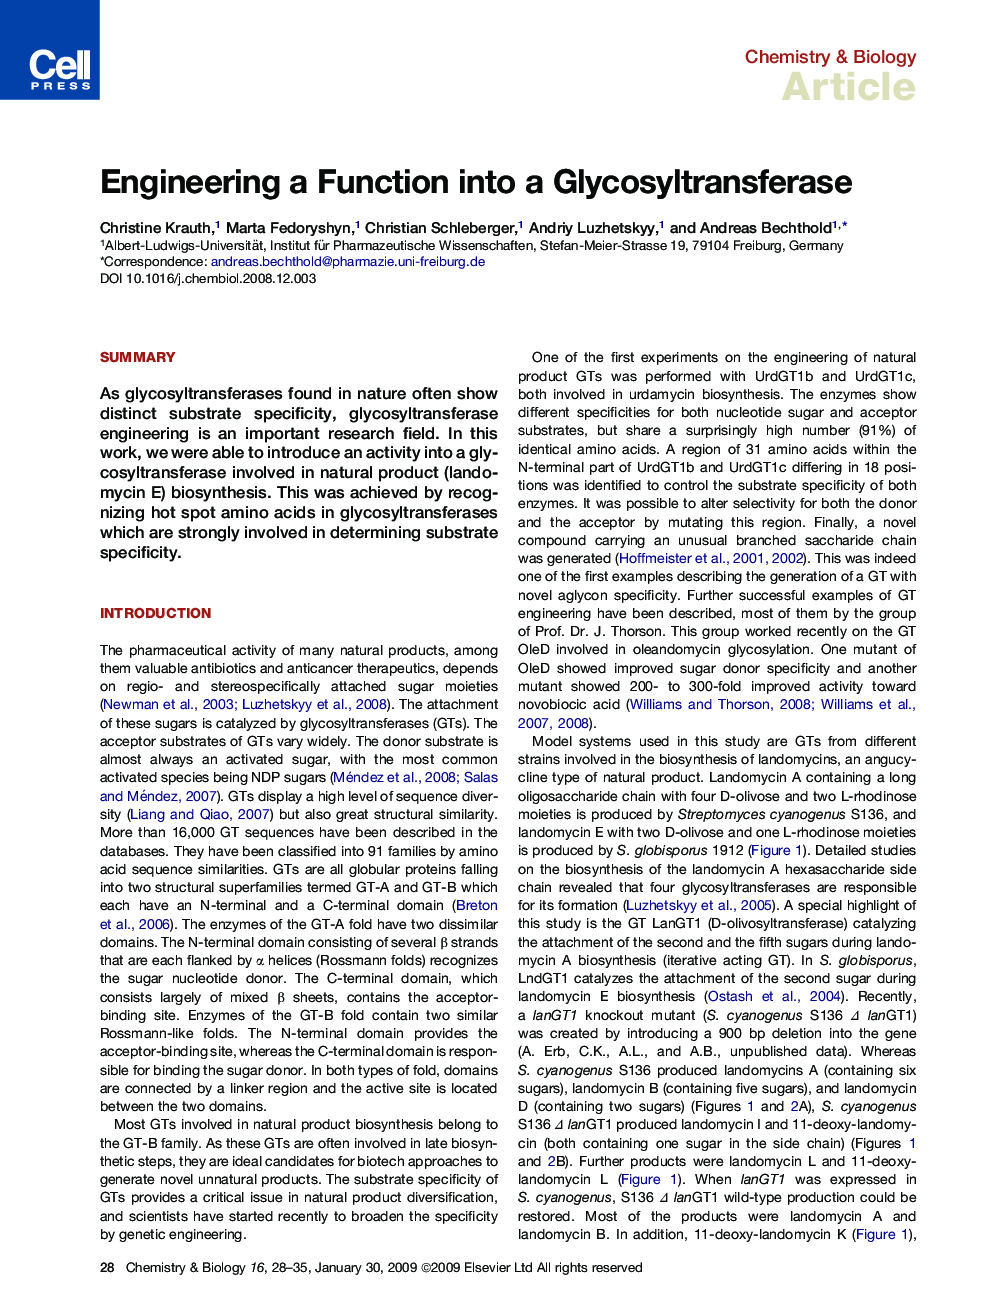 Engineering a Function into a Glycosyltransferase